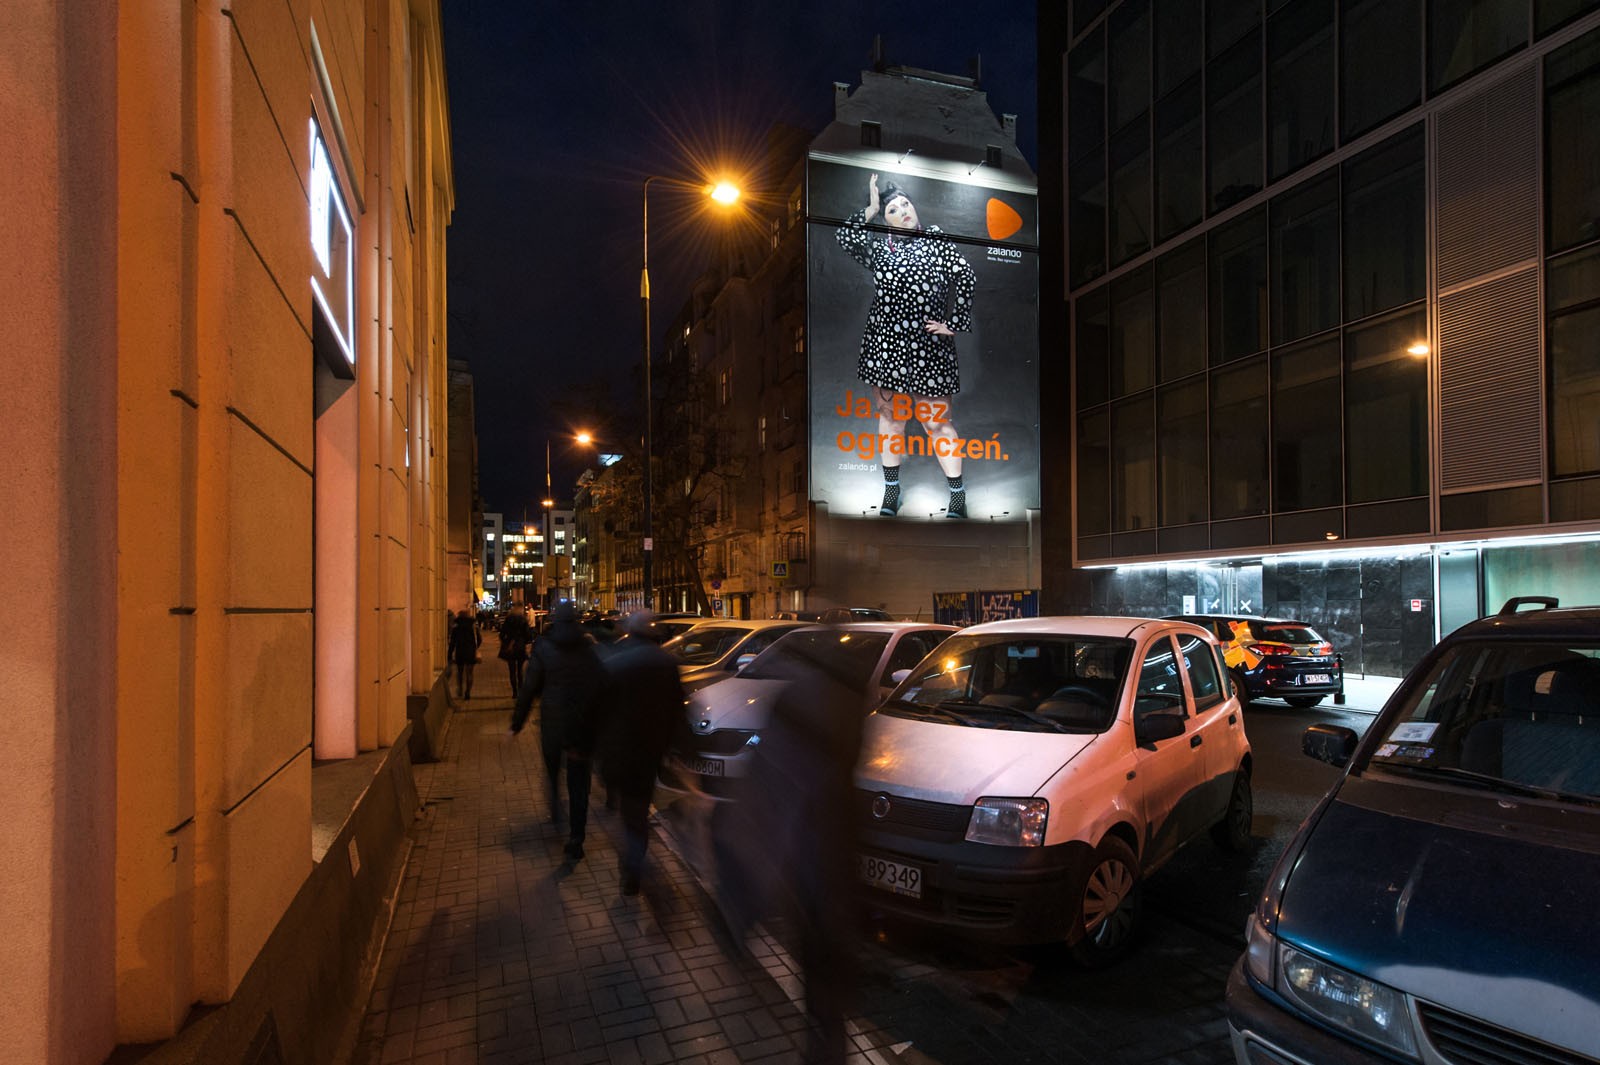 Advertising mural for clothing brand zalando in Warsaw downtown | Ja. Bez ograniczeń | Portfolio